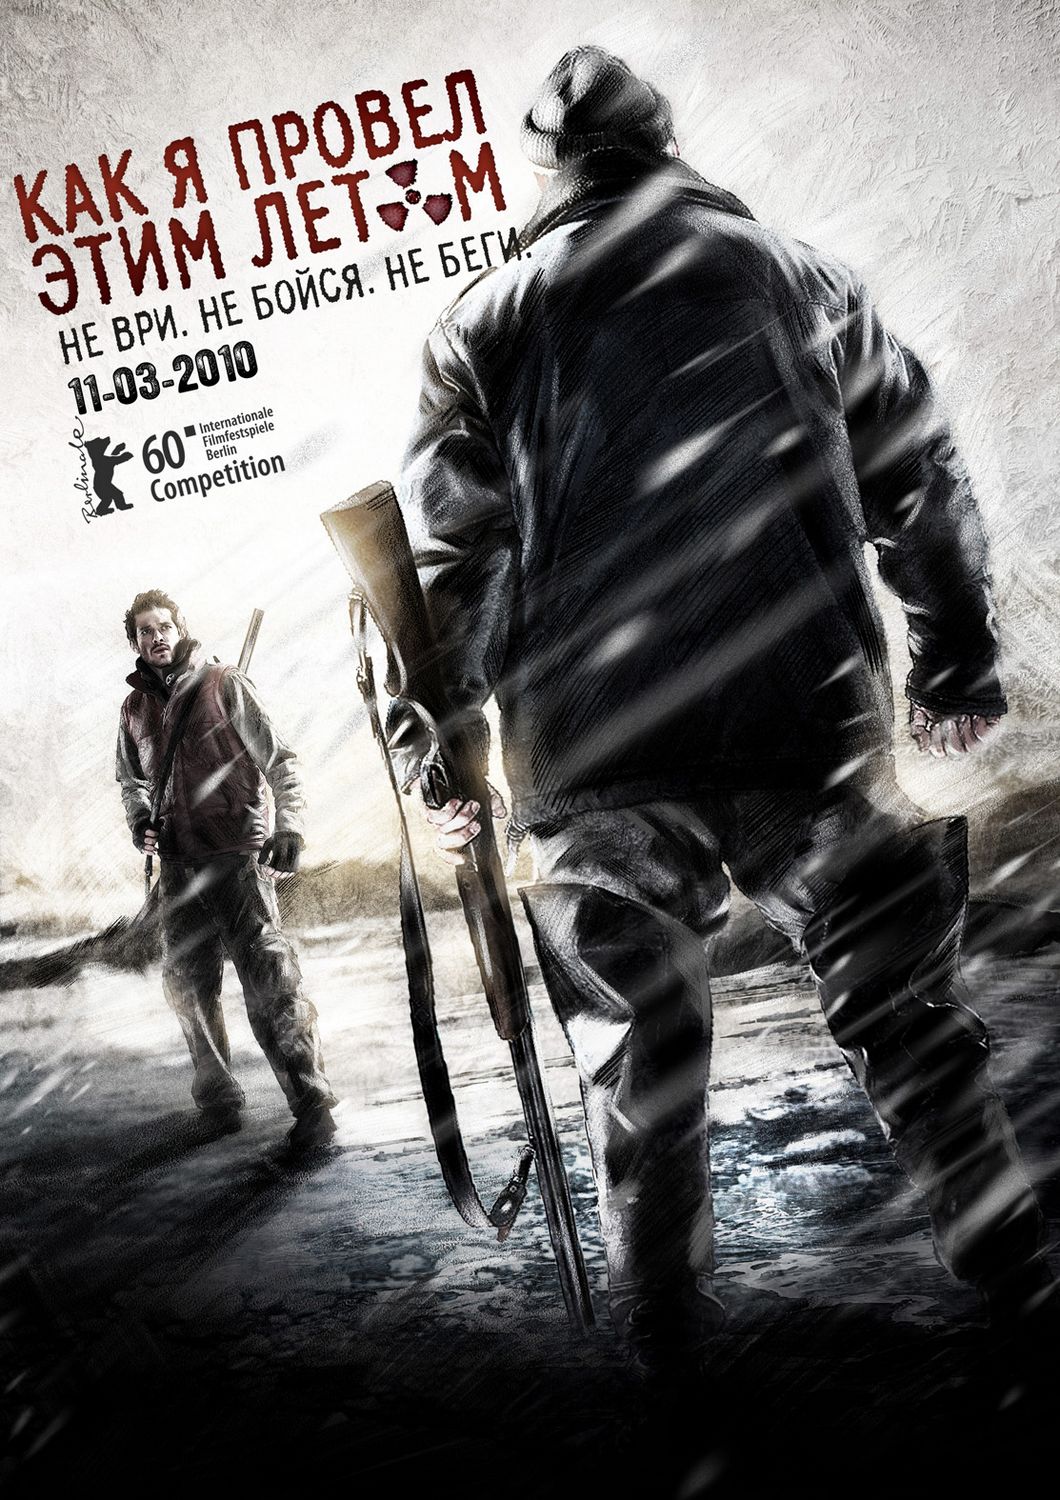 Extra Large Movie Poster Image for Kak ya provyol etim letom (#2 of 3)